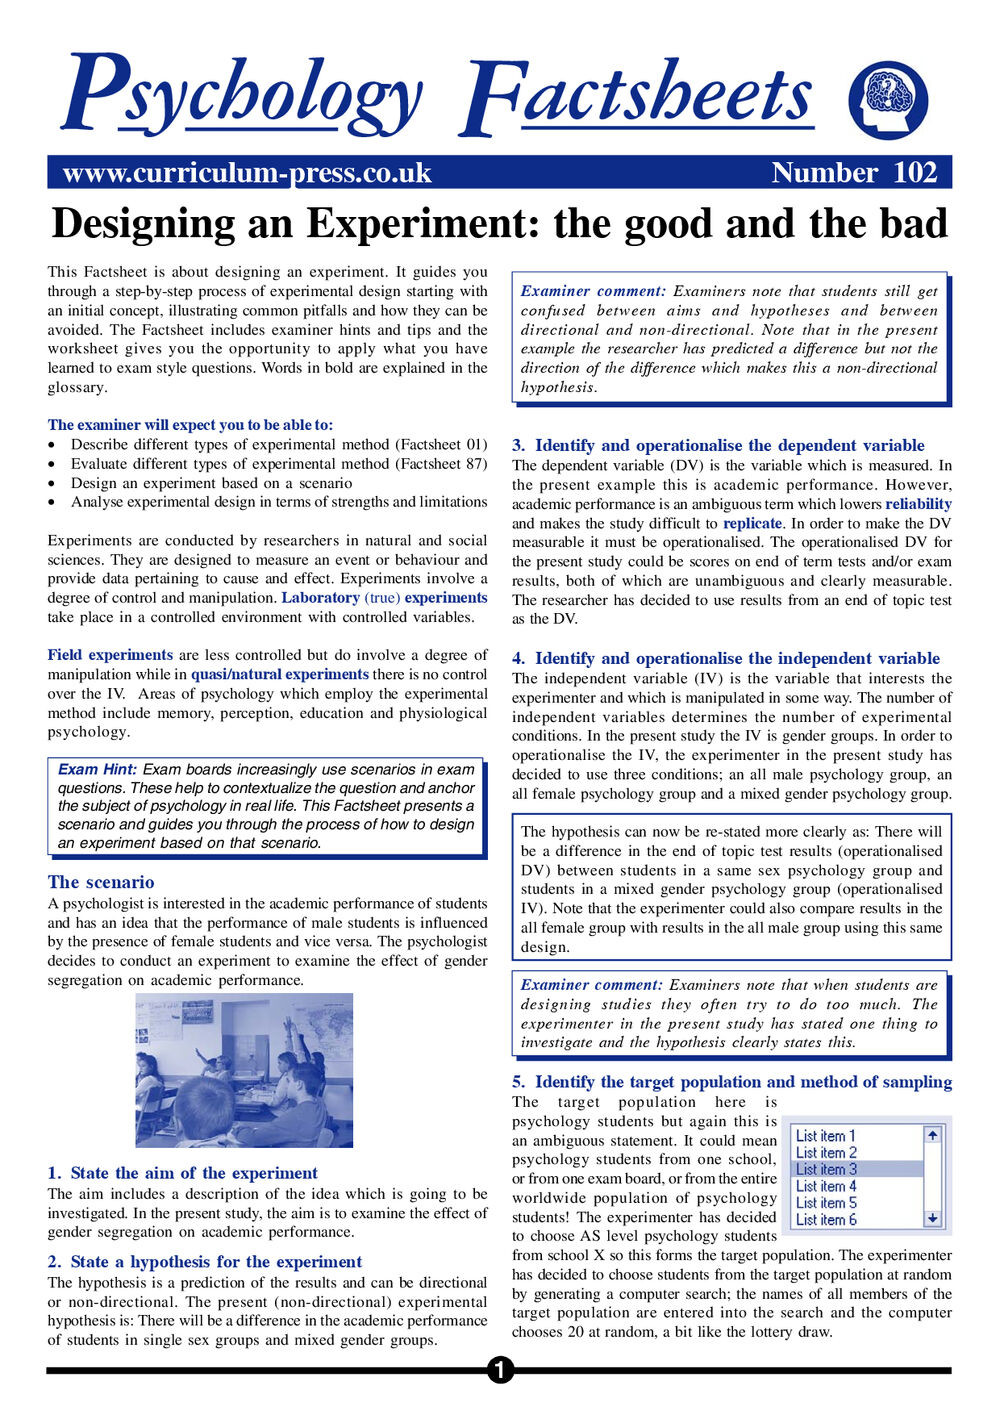 Designing An Experiment Worksheet Curriculum Press Designing An Experiment the Good and the Bad